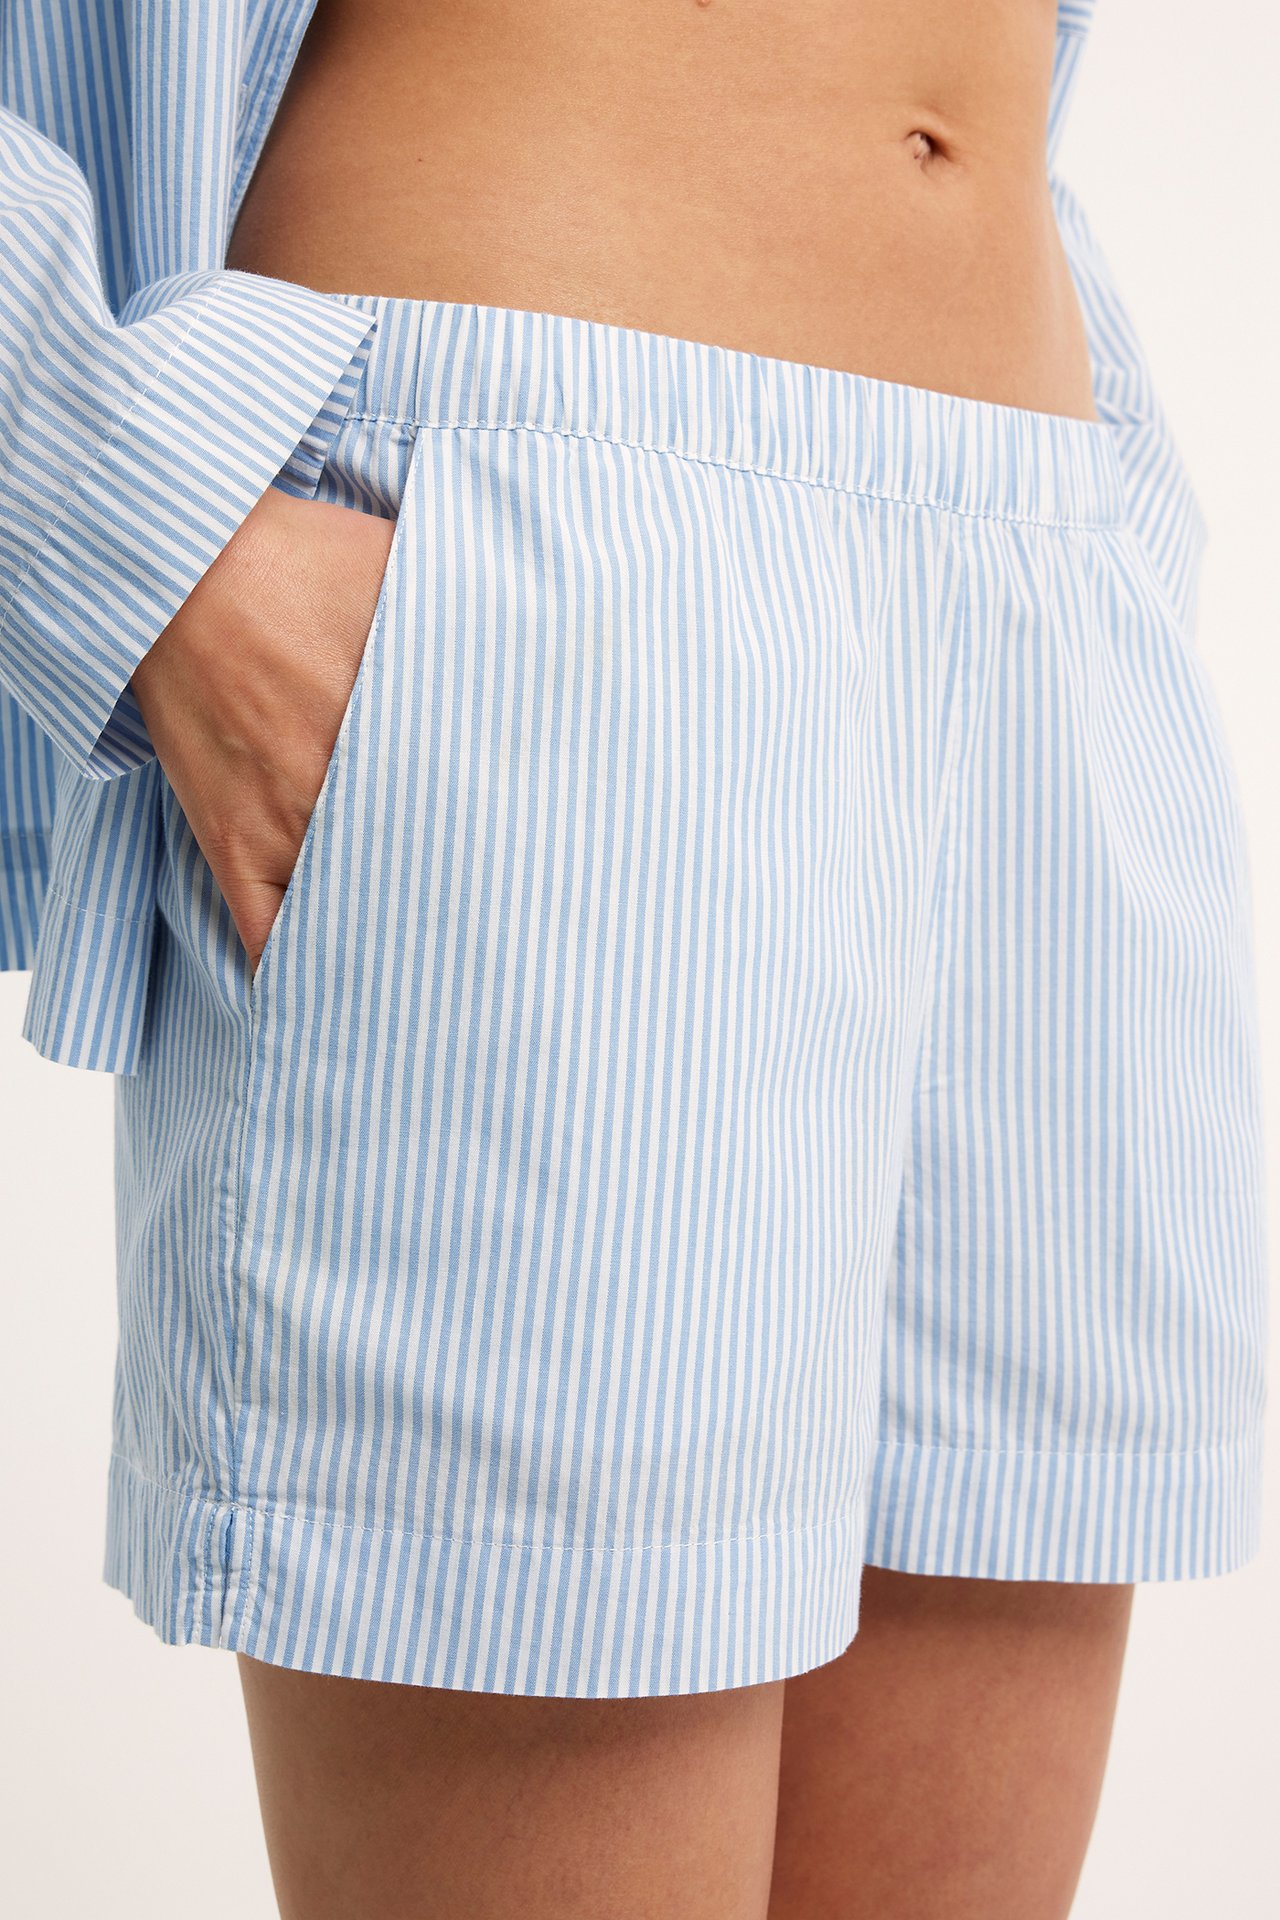 Pyjamasshortsit - Sininen - 178cm / Storlek: S - 2